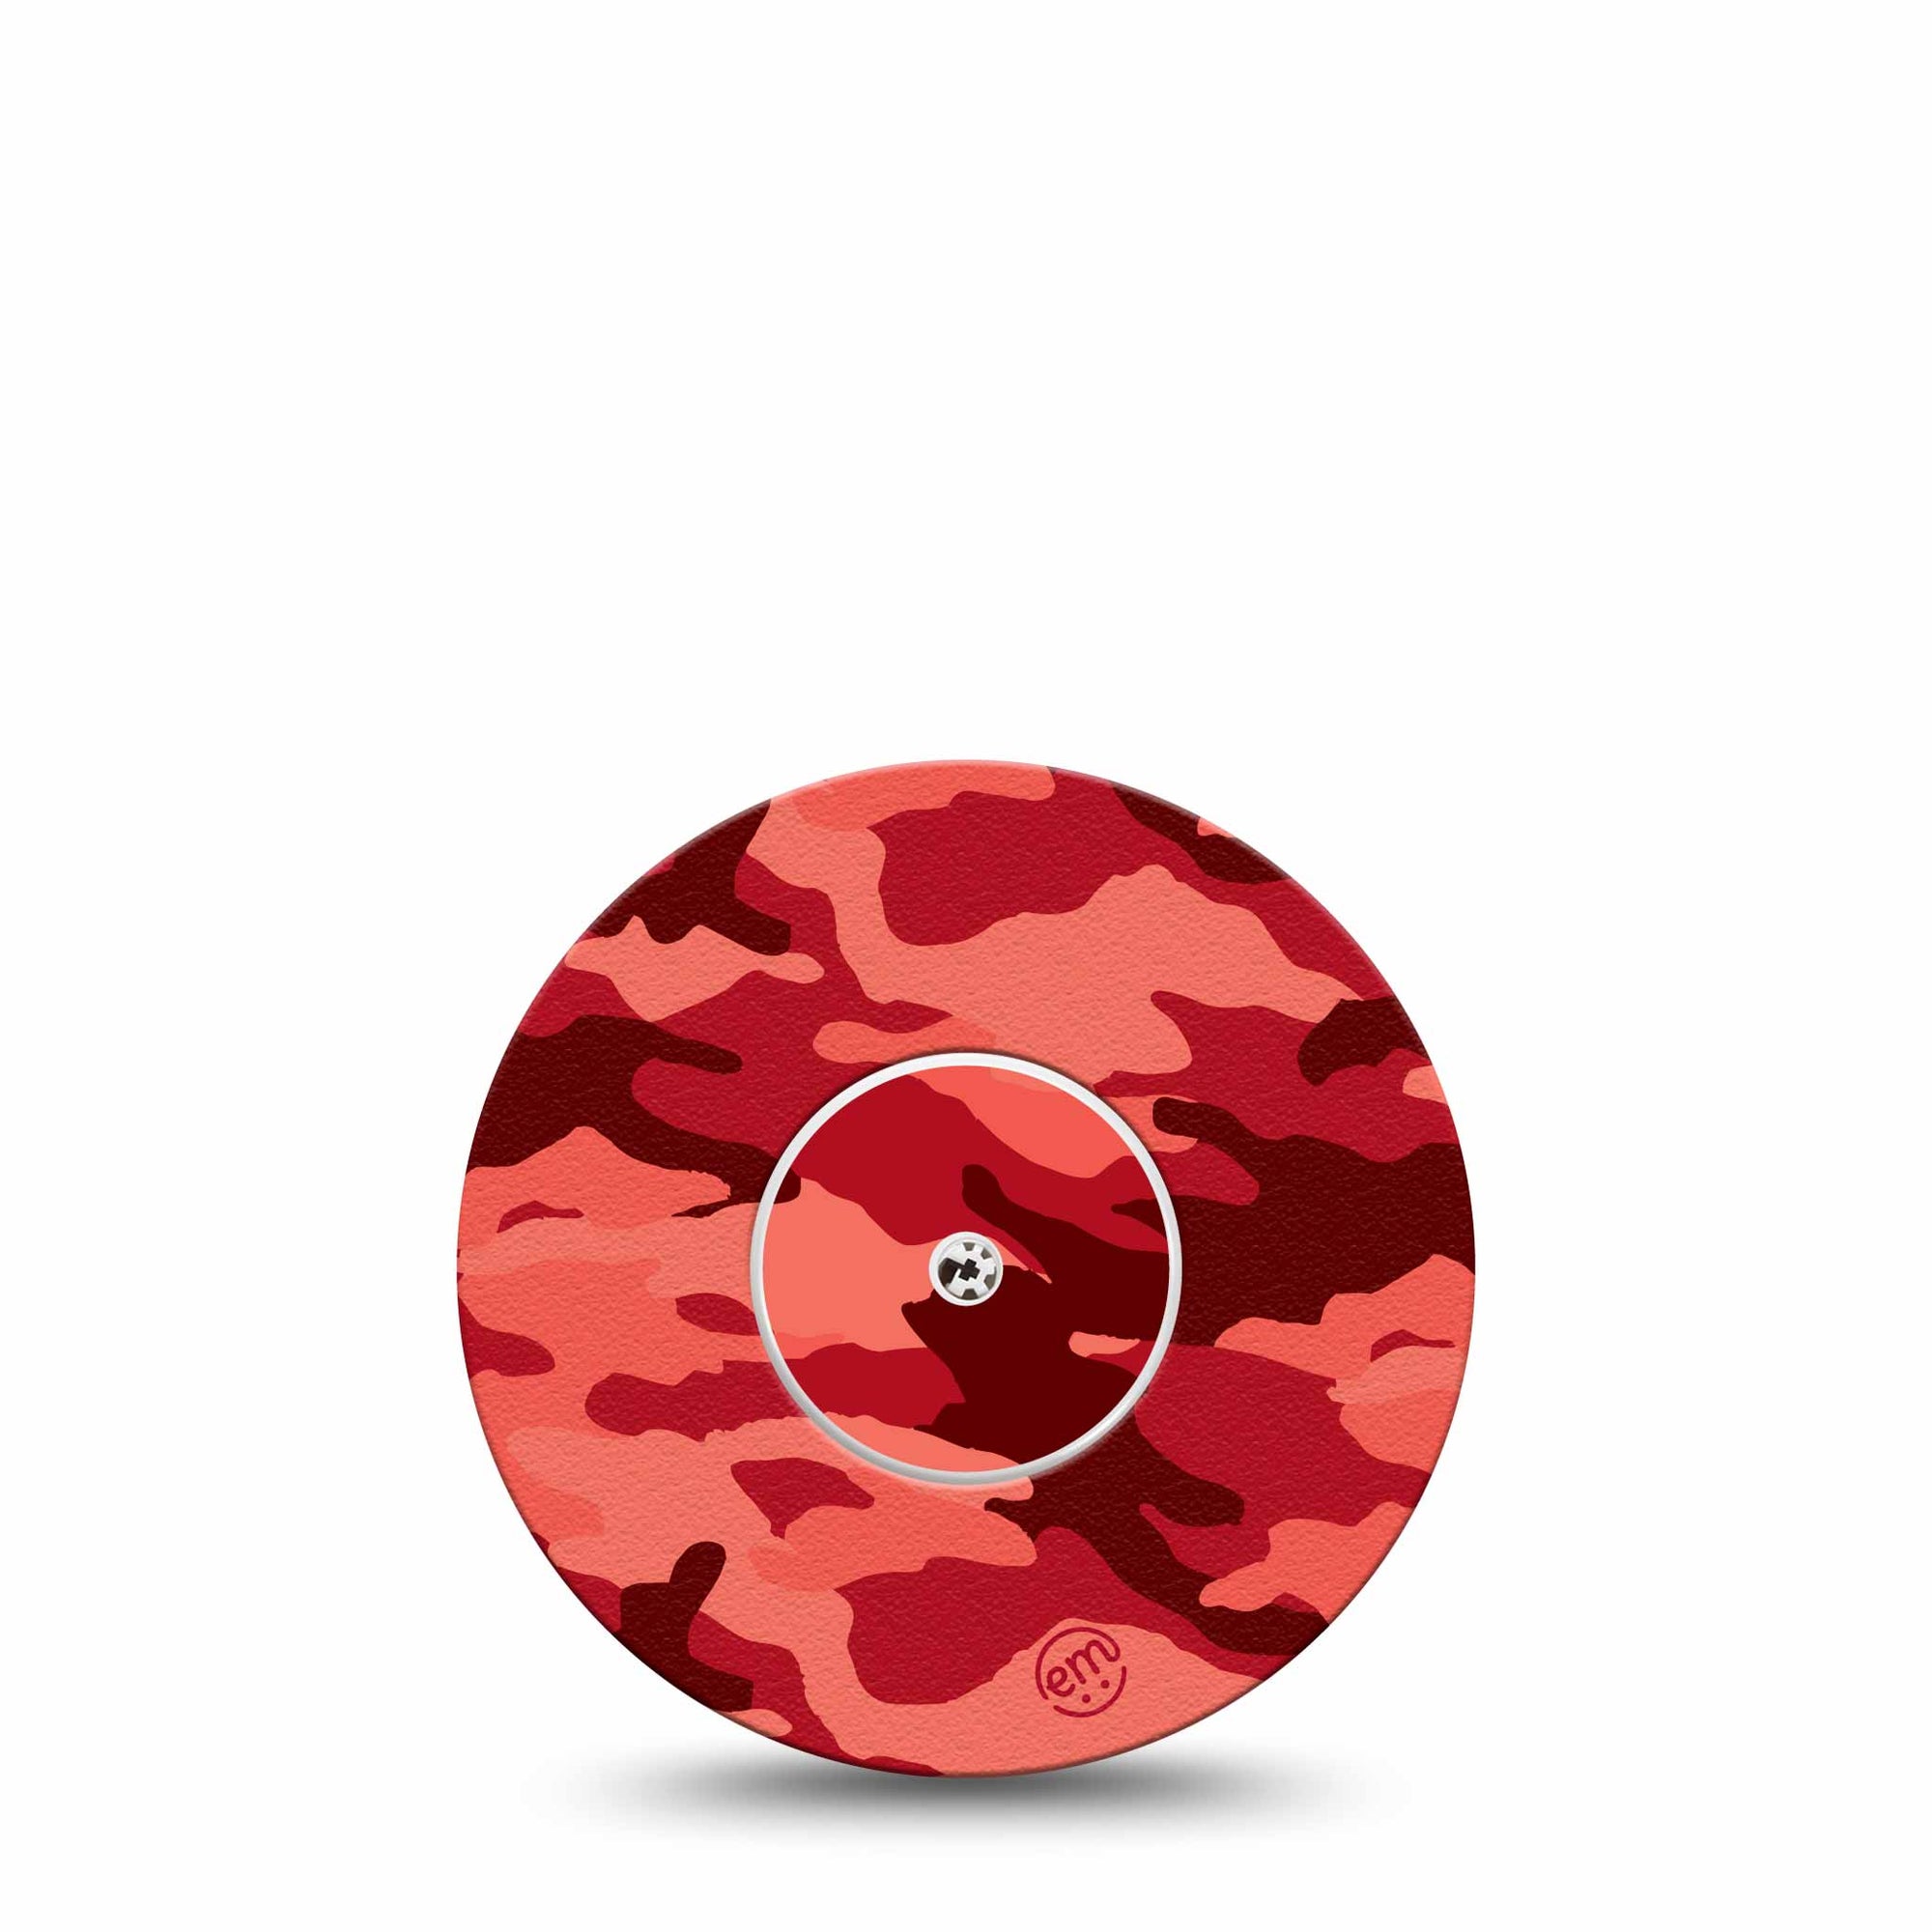 ExpressionMed Red Camo Libre Transmitter Sticker, Abbott Lingo